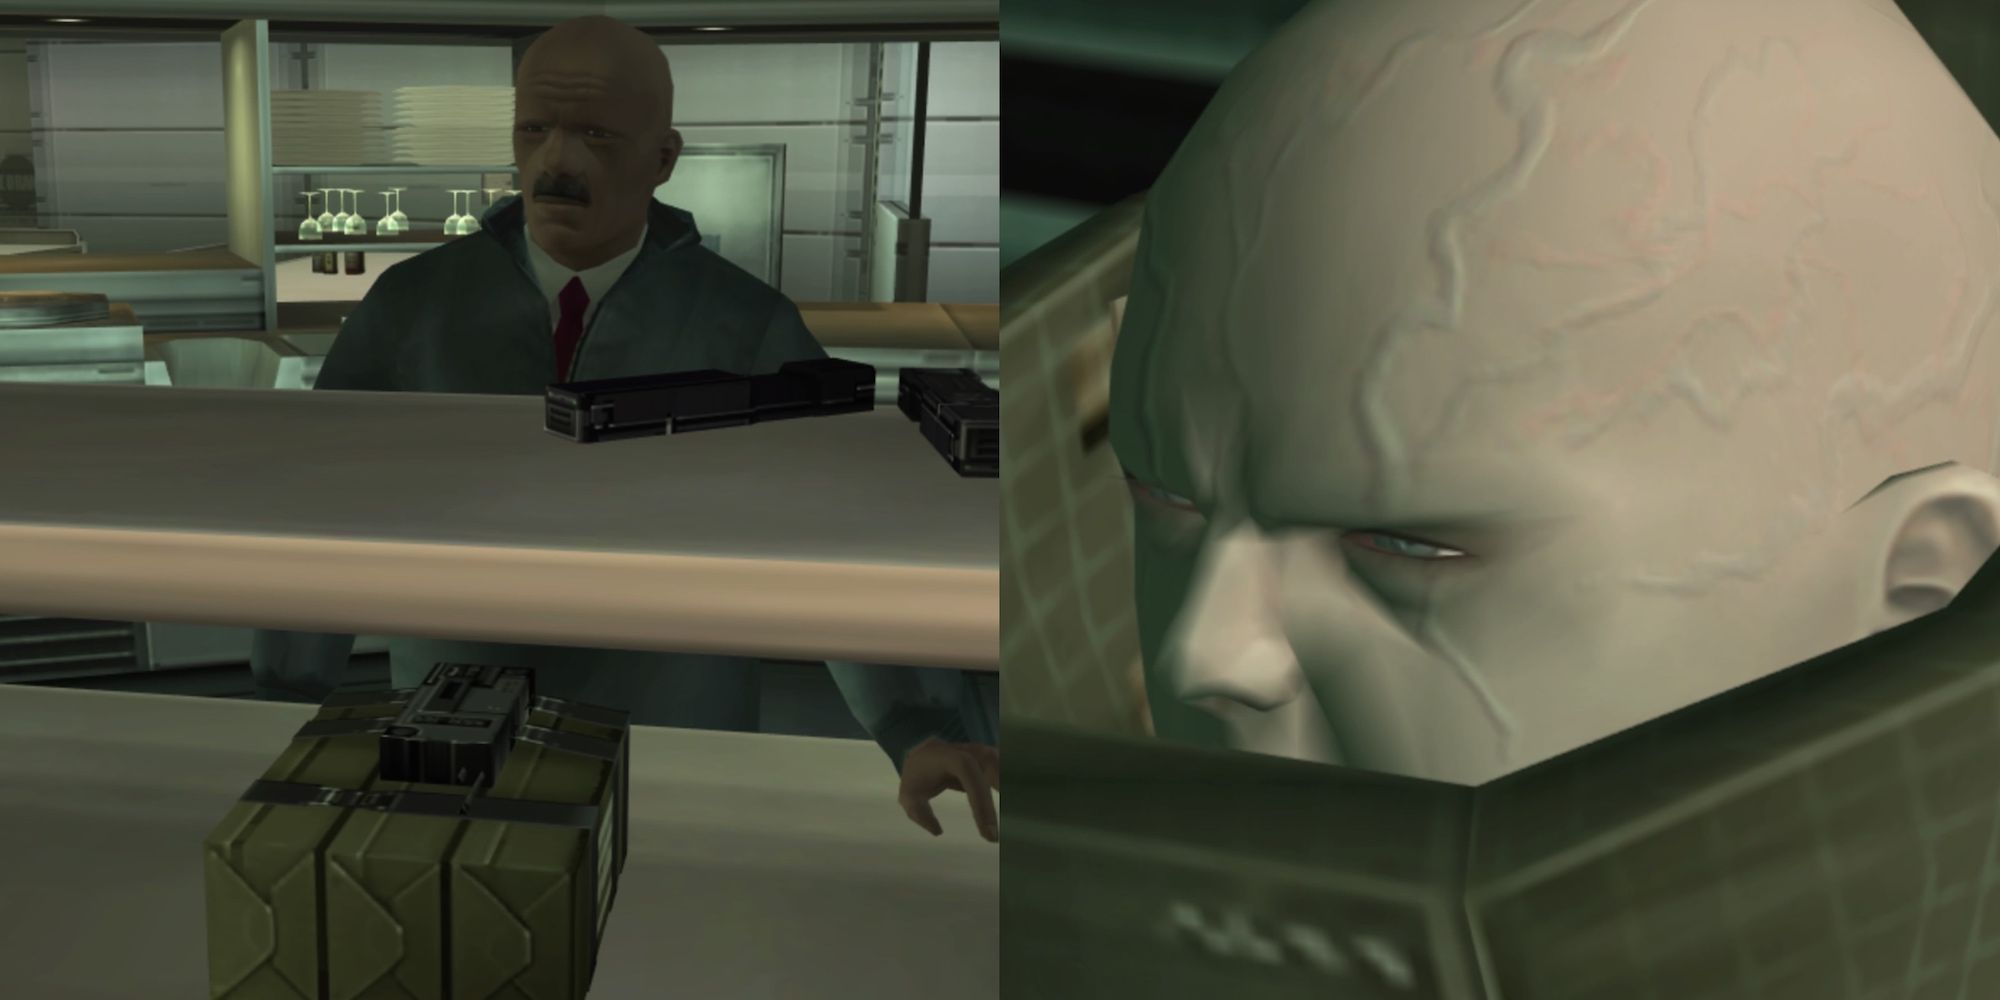 Metal Gear Solid 2 Split image stillman and fatman